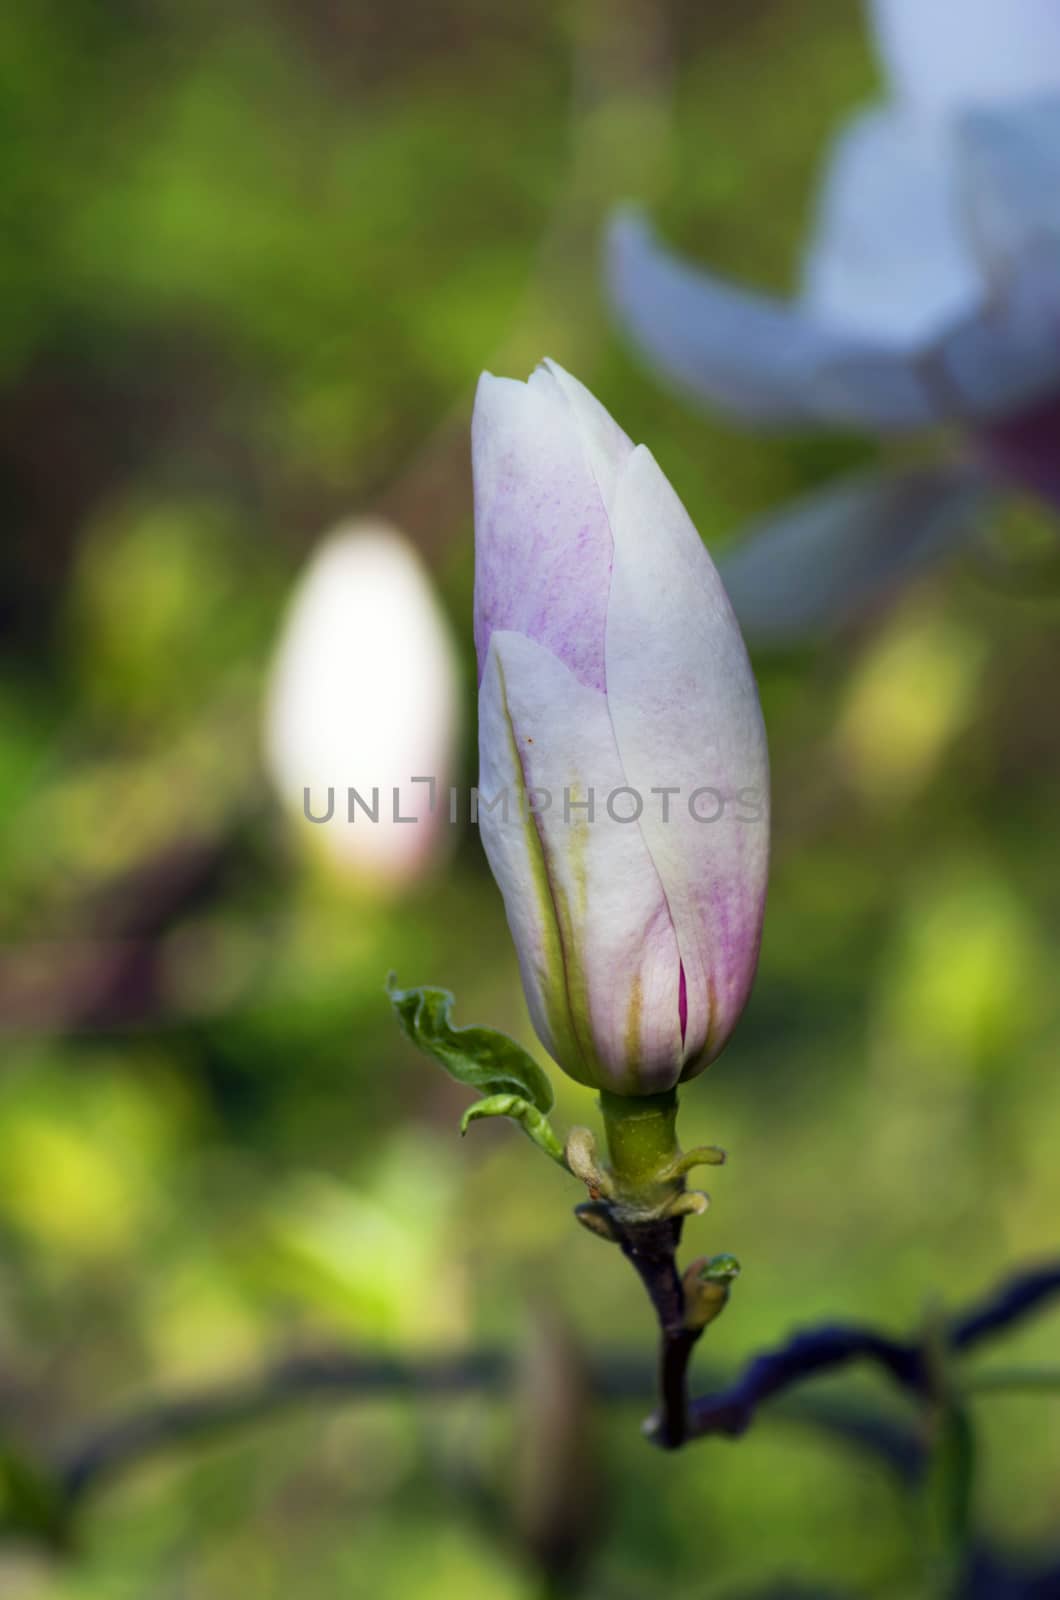 magnolia tree blossom over natural background